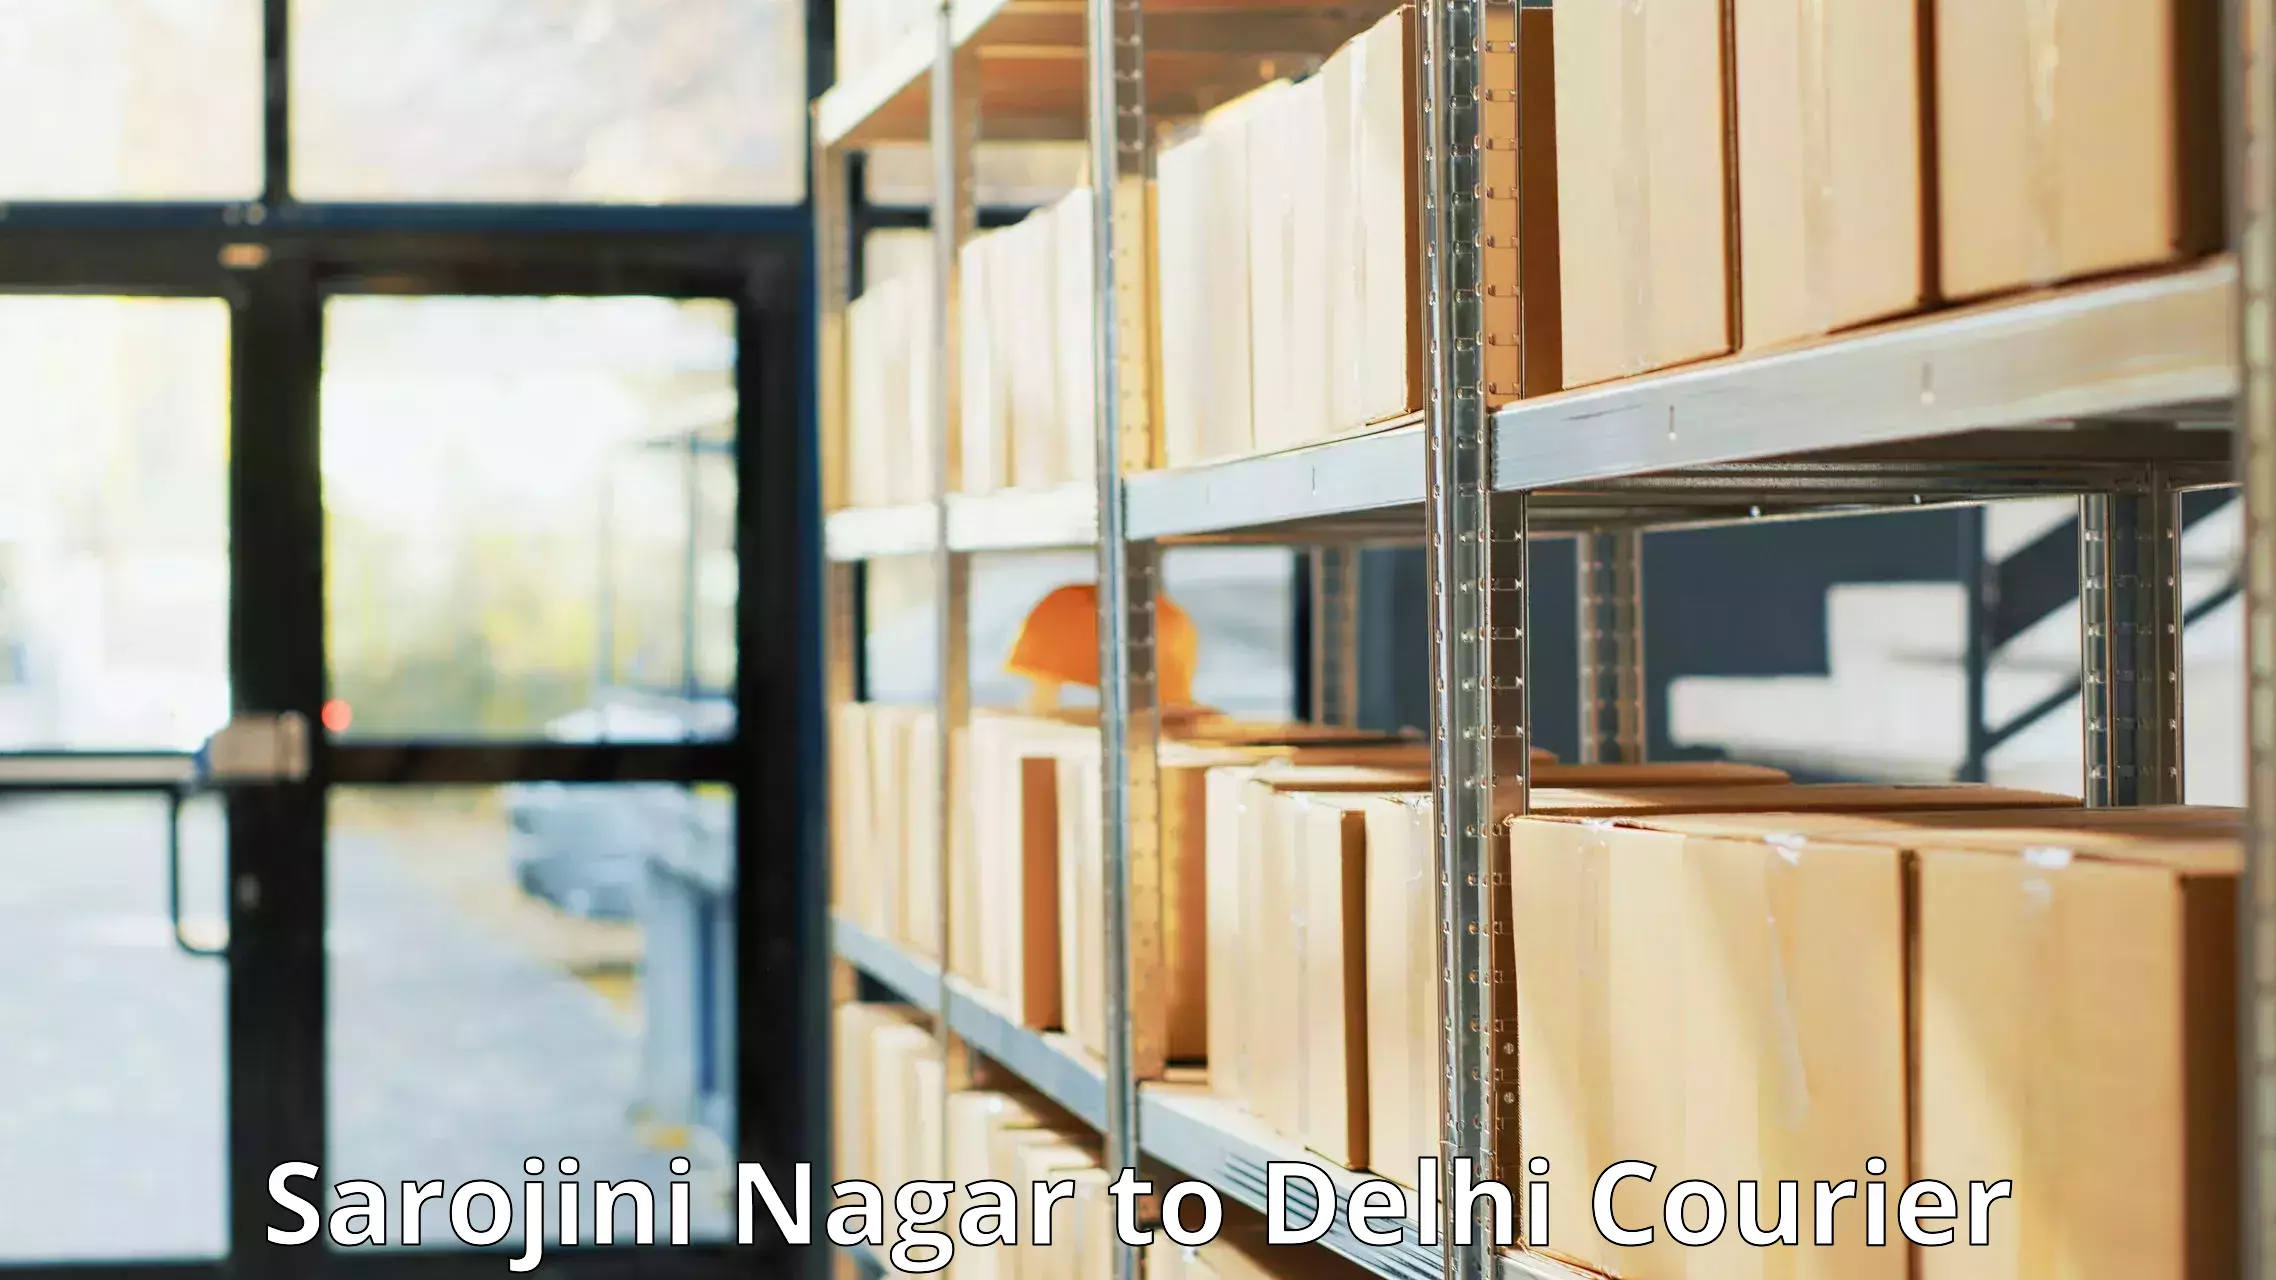 Courier service partnerships Sarojini Nagar to Ashok Vihar